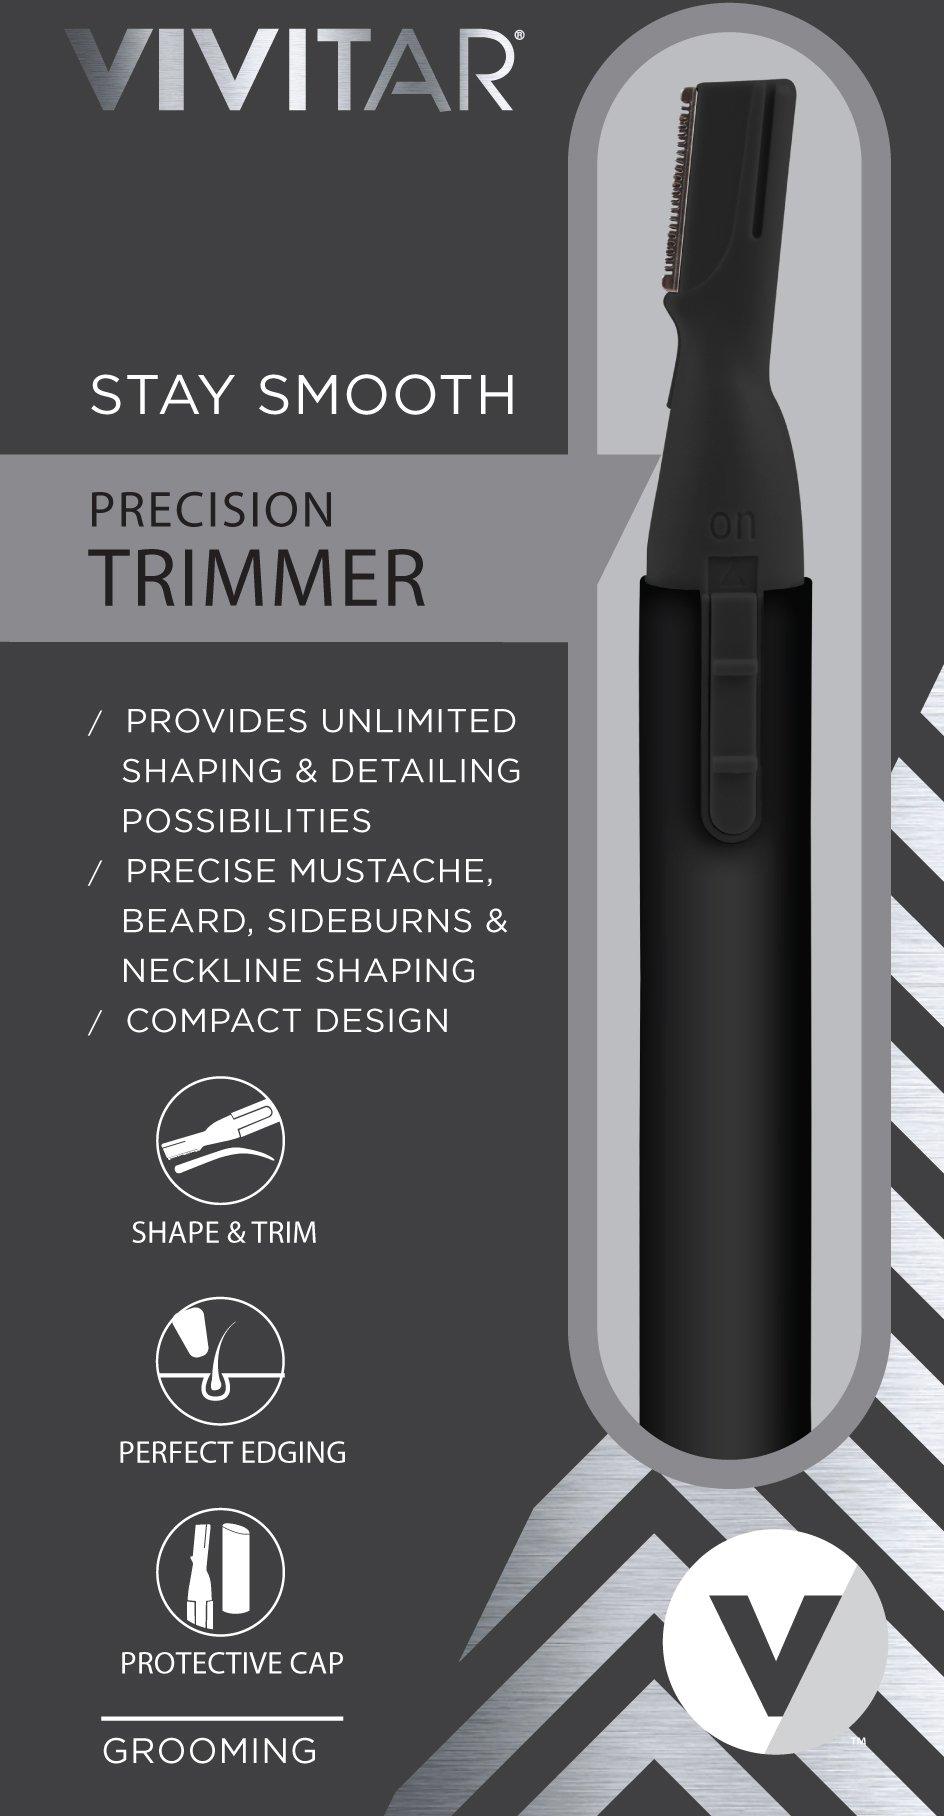 Vivitar Stay Smooth Precision Trimmer